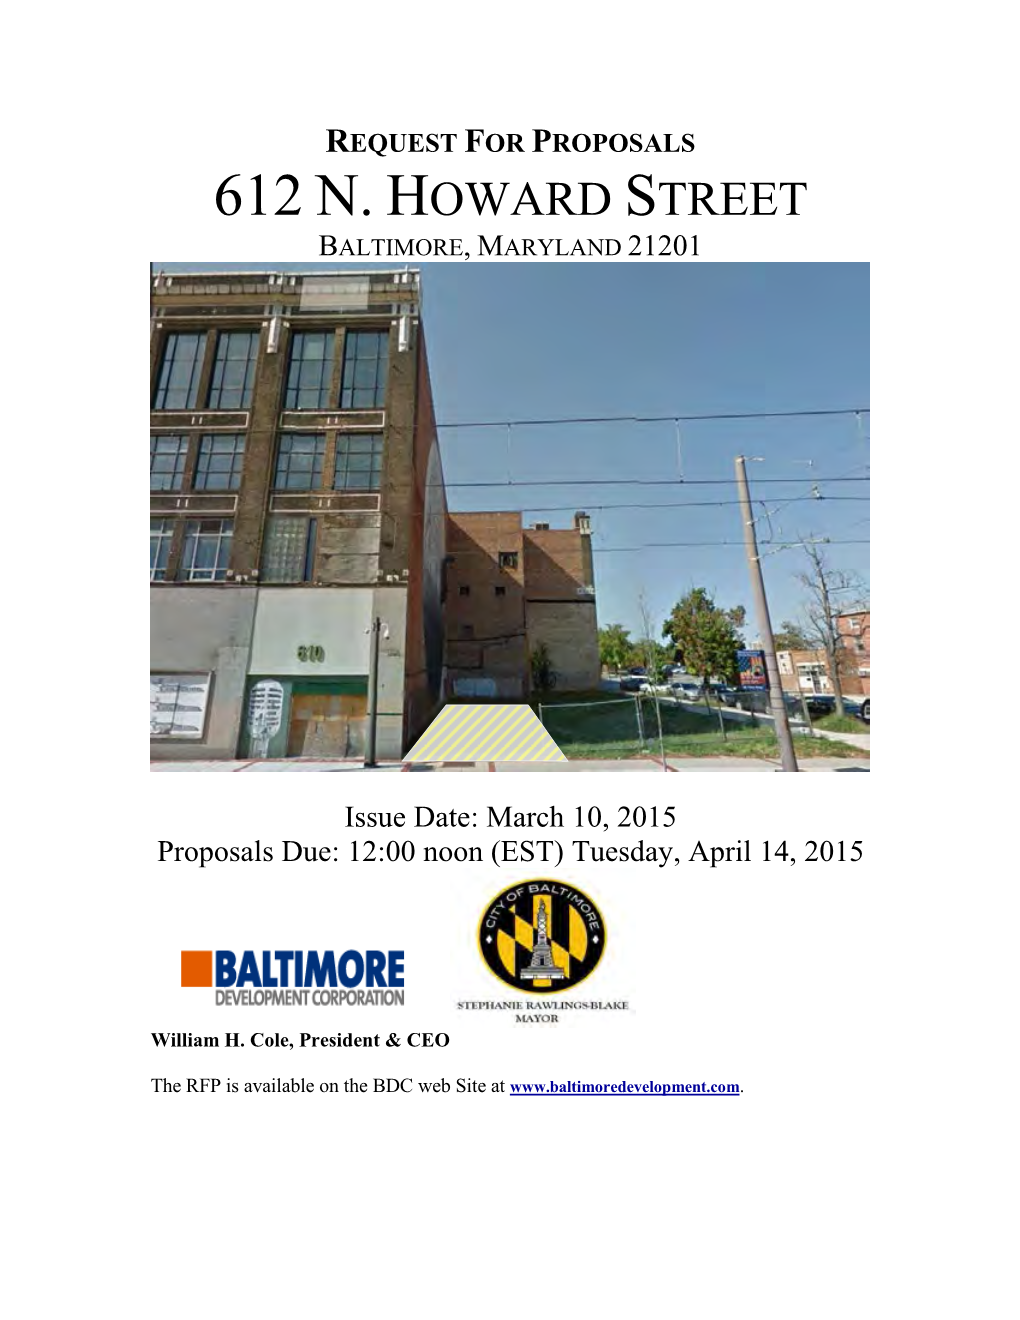 612 N. Howard Street Baltimore, Maryland 21201